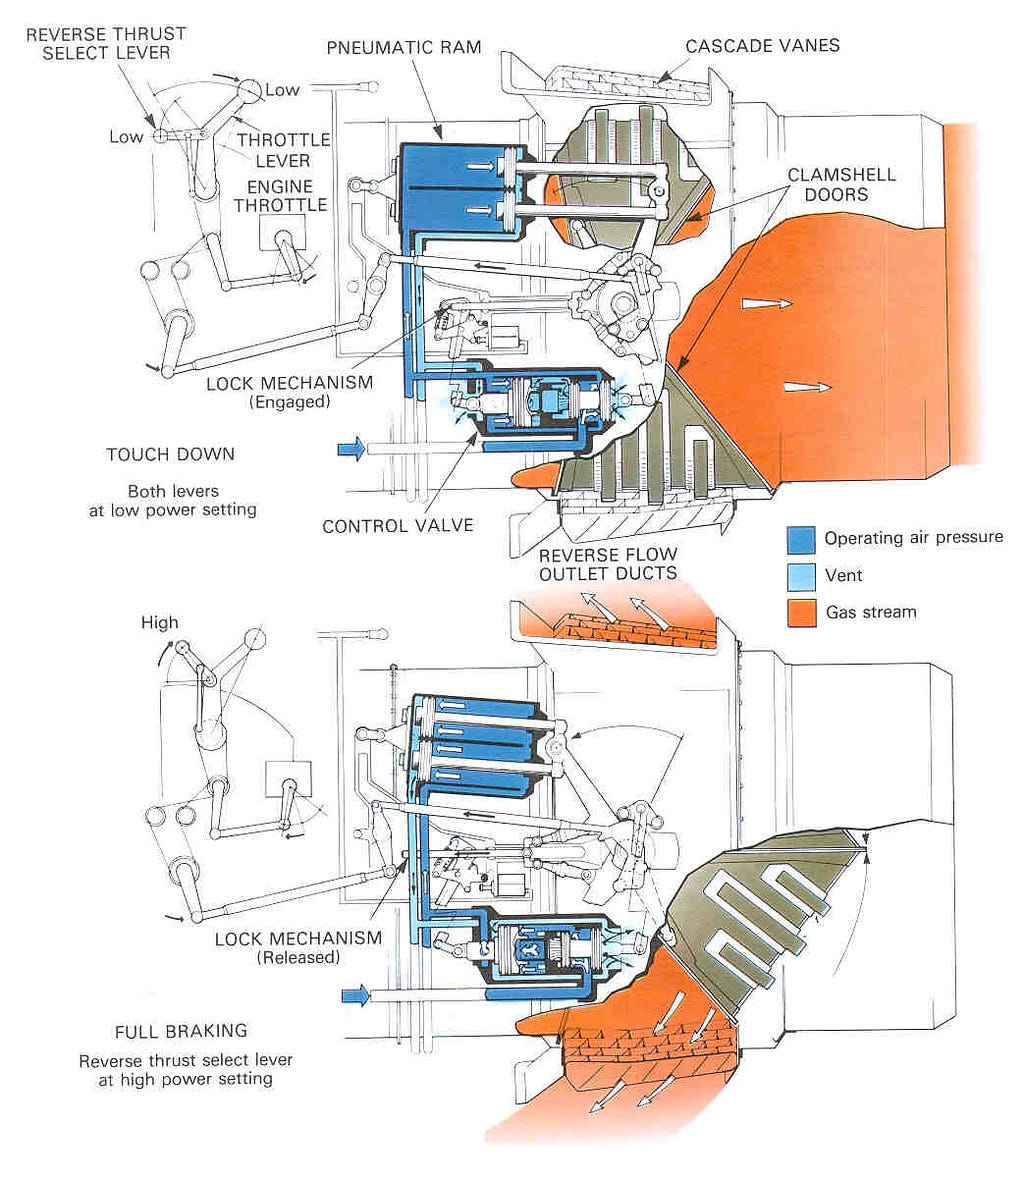 Internal Mechanism of Clamshell Reversers. Source: Purdue University